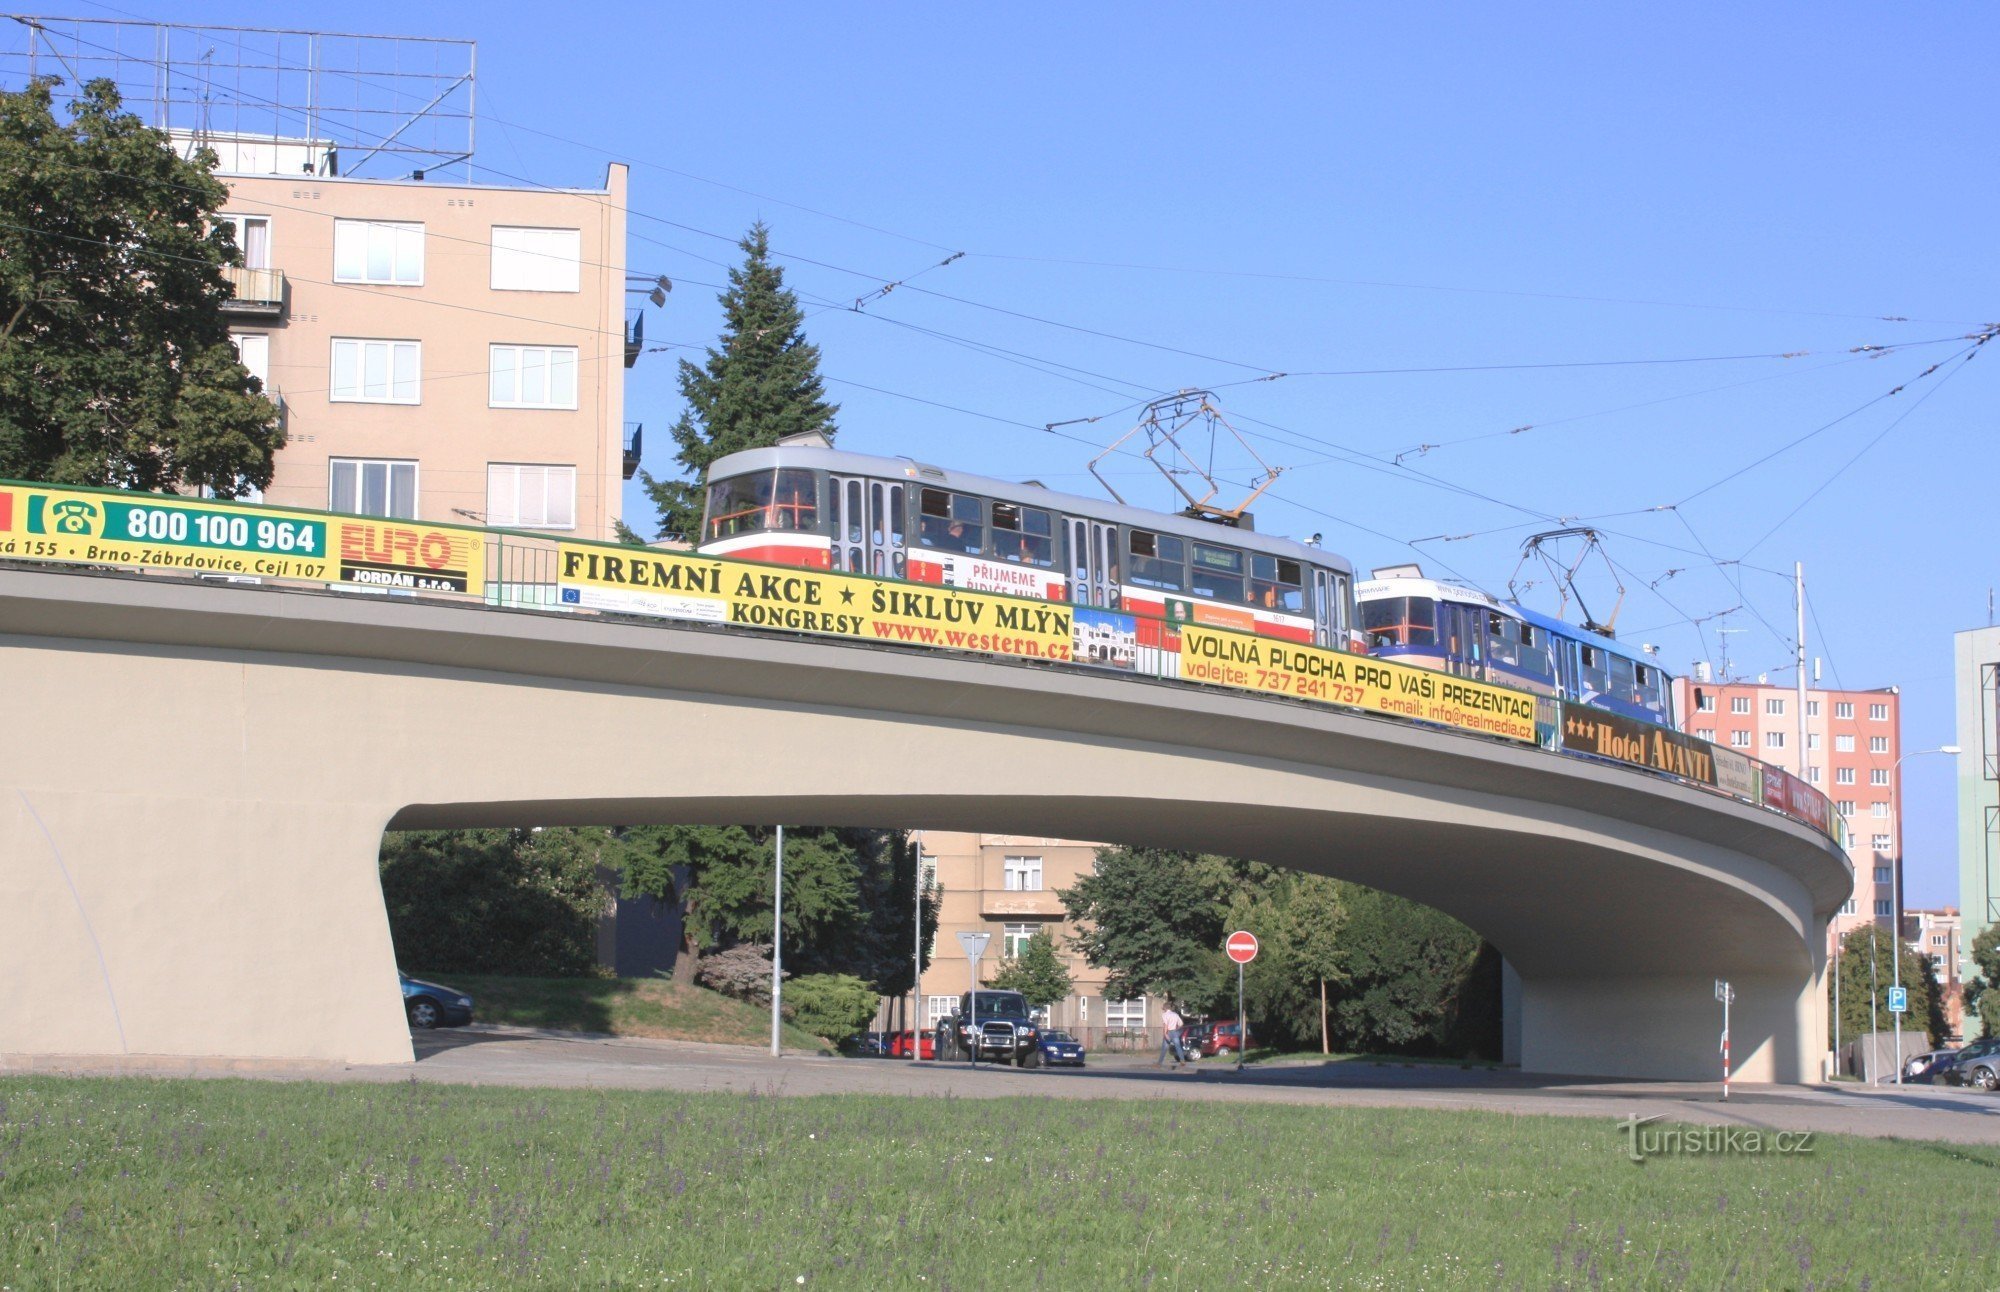 Brno-Pisárky - tram bridge